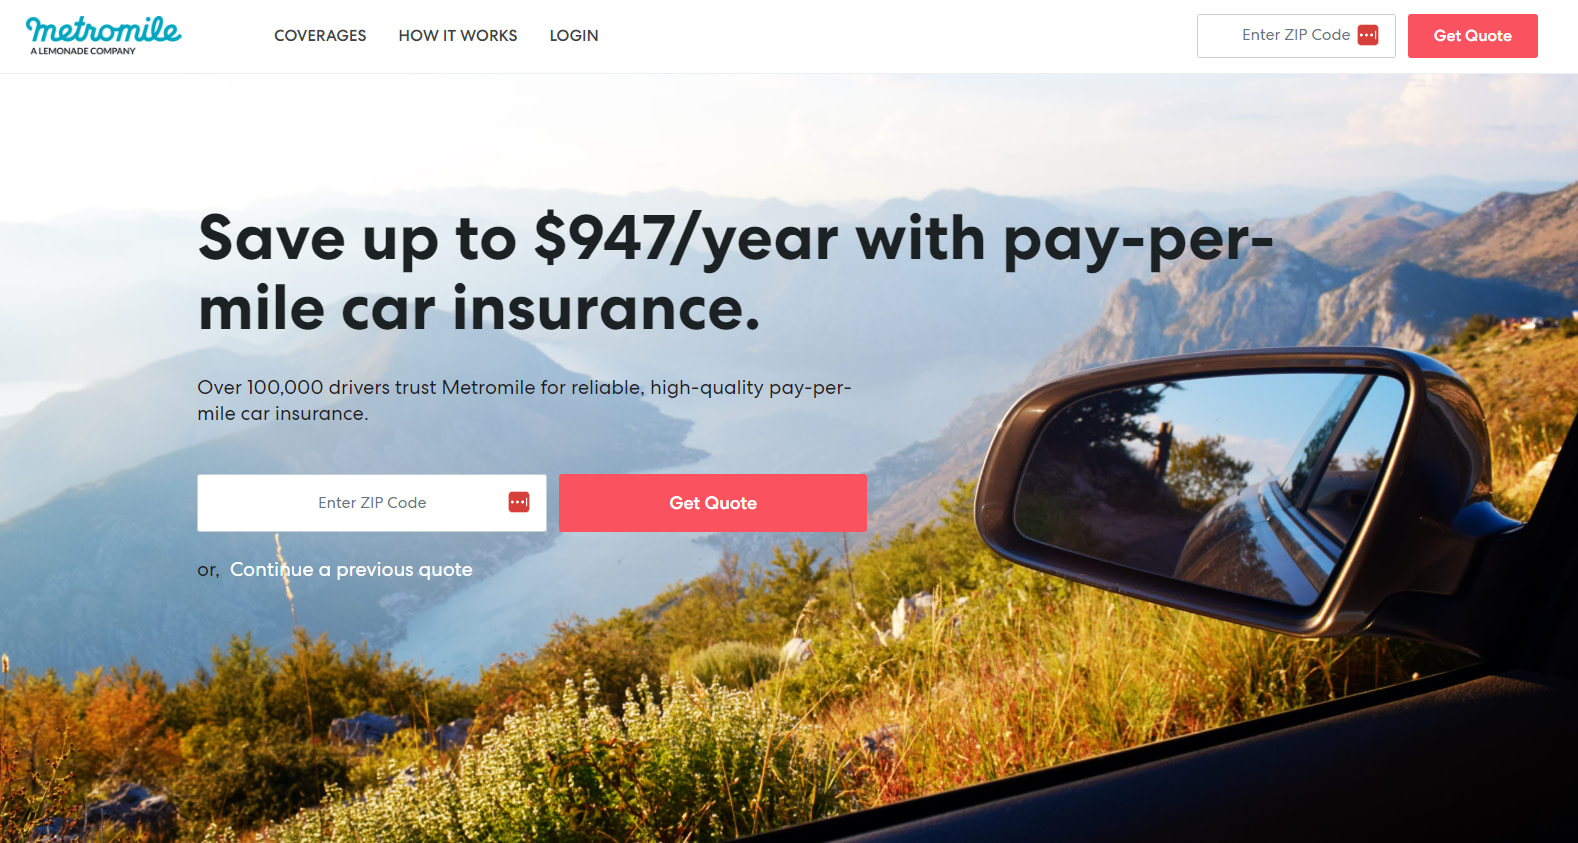 Pay-per-mile car insurance: Metromile - homepage